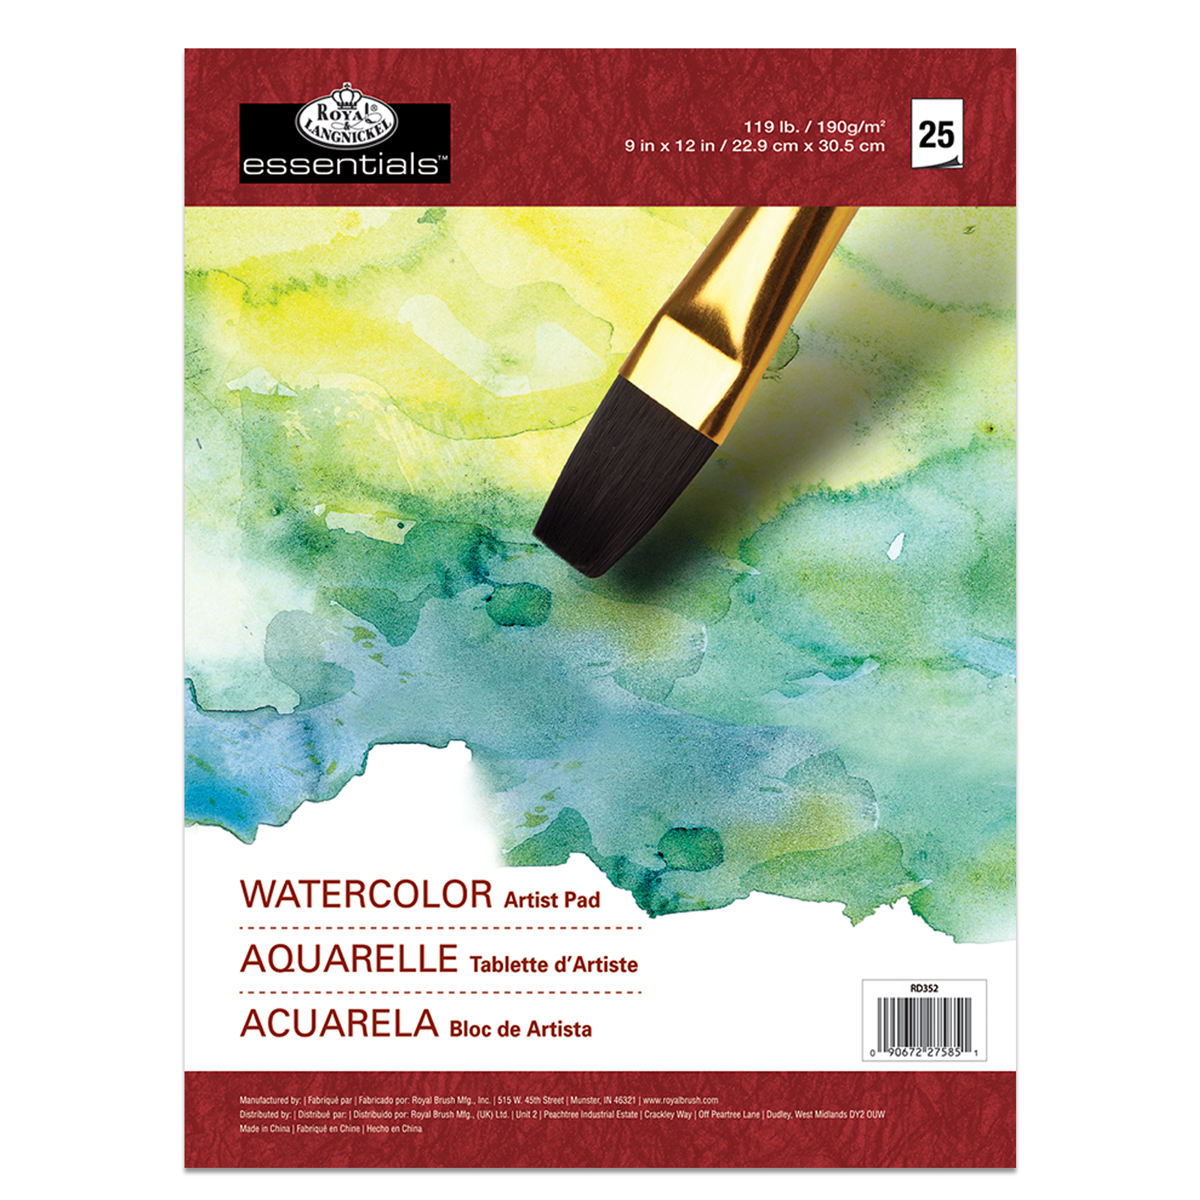 Royal & Langnickel Watercolor Pad, 9 X 12 - image 1 of 5